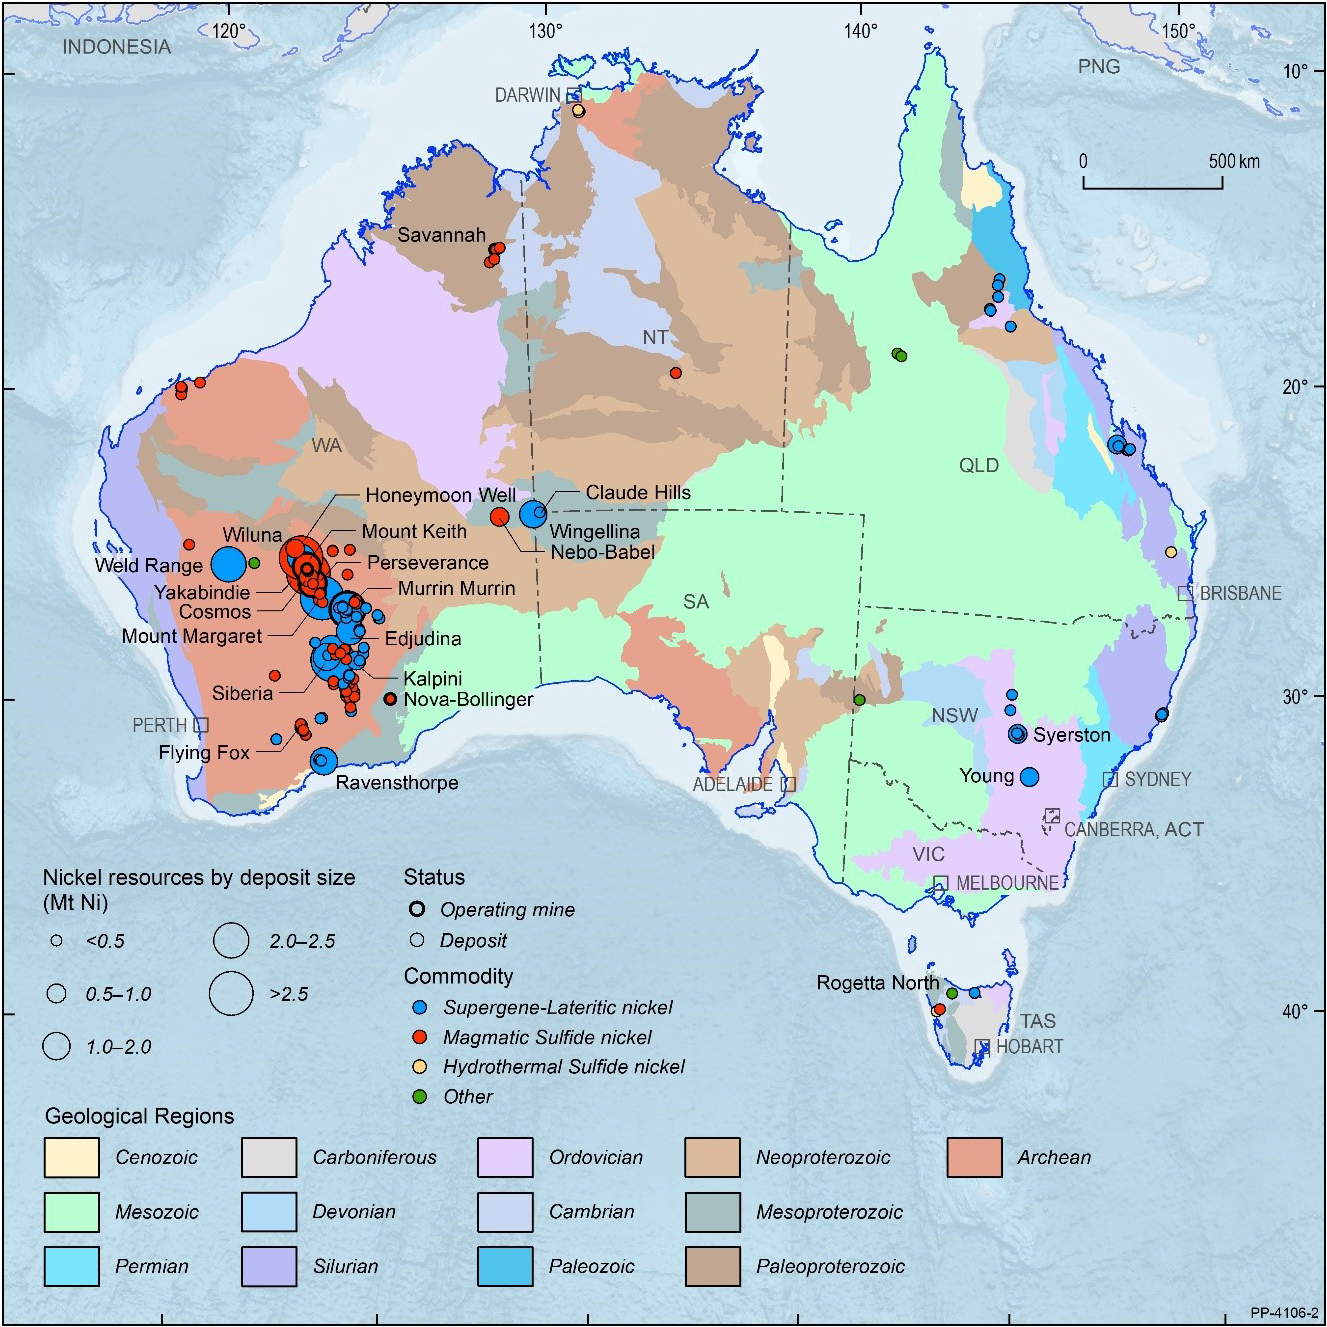 Nickel-Cu-PGE Mineral Potential Map, WA Dulfer, H. 2016 (Geoscience Australia) - Click to enlarge